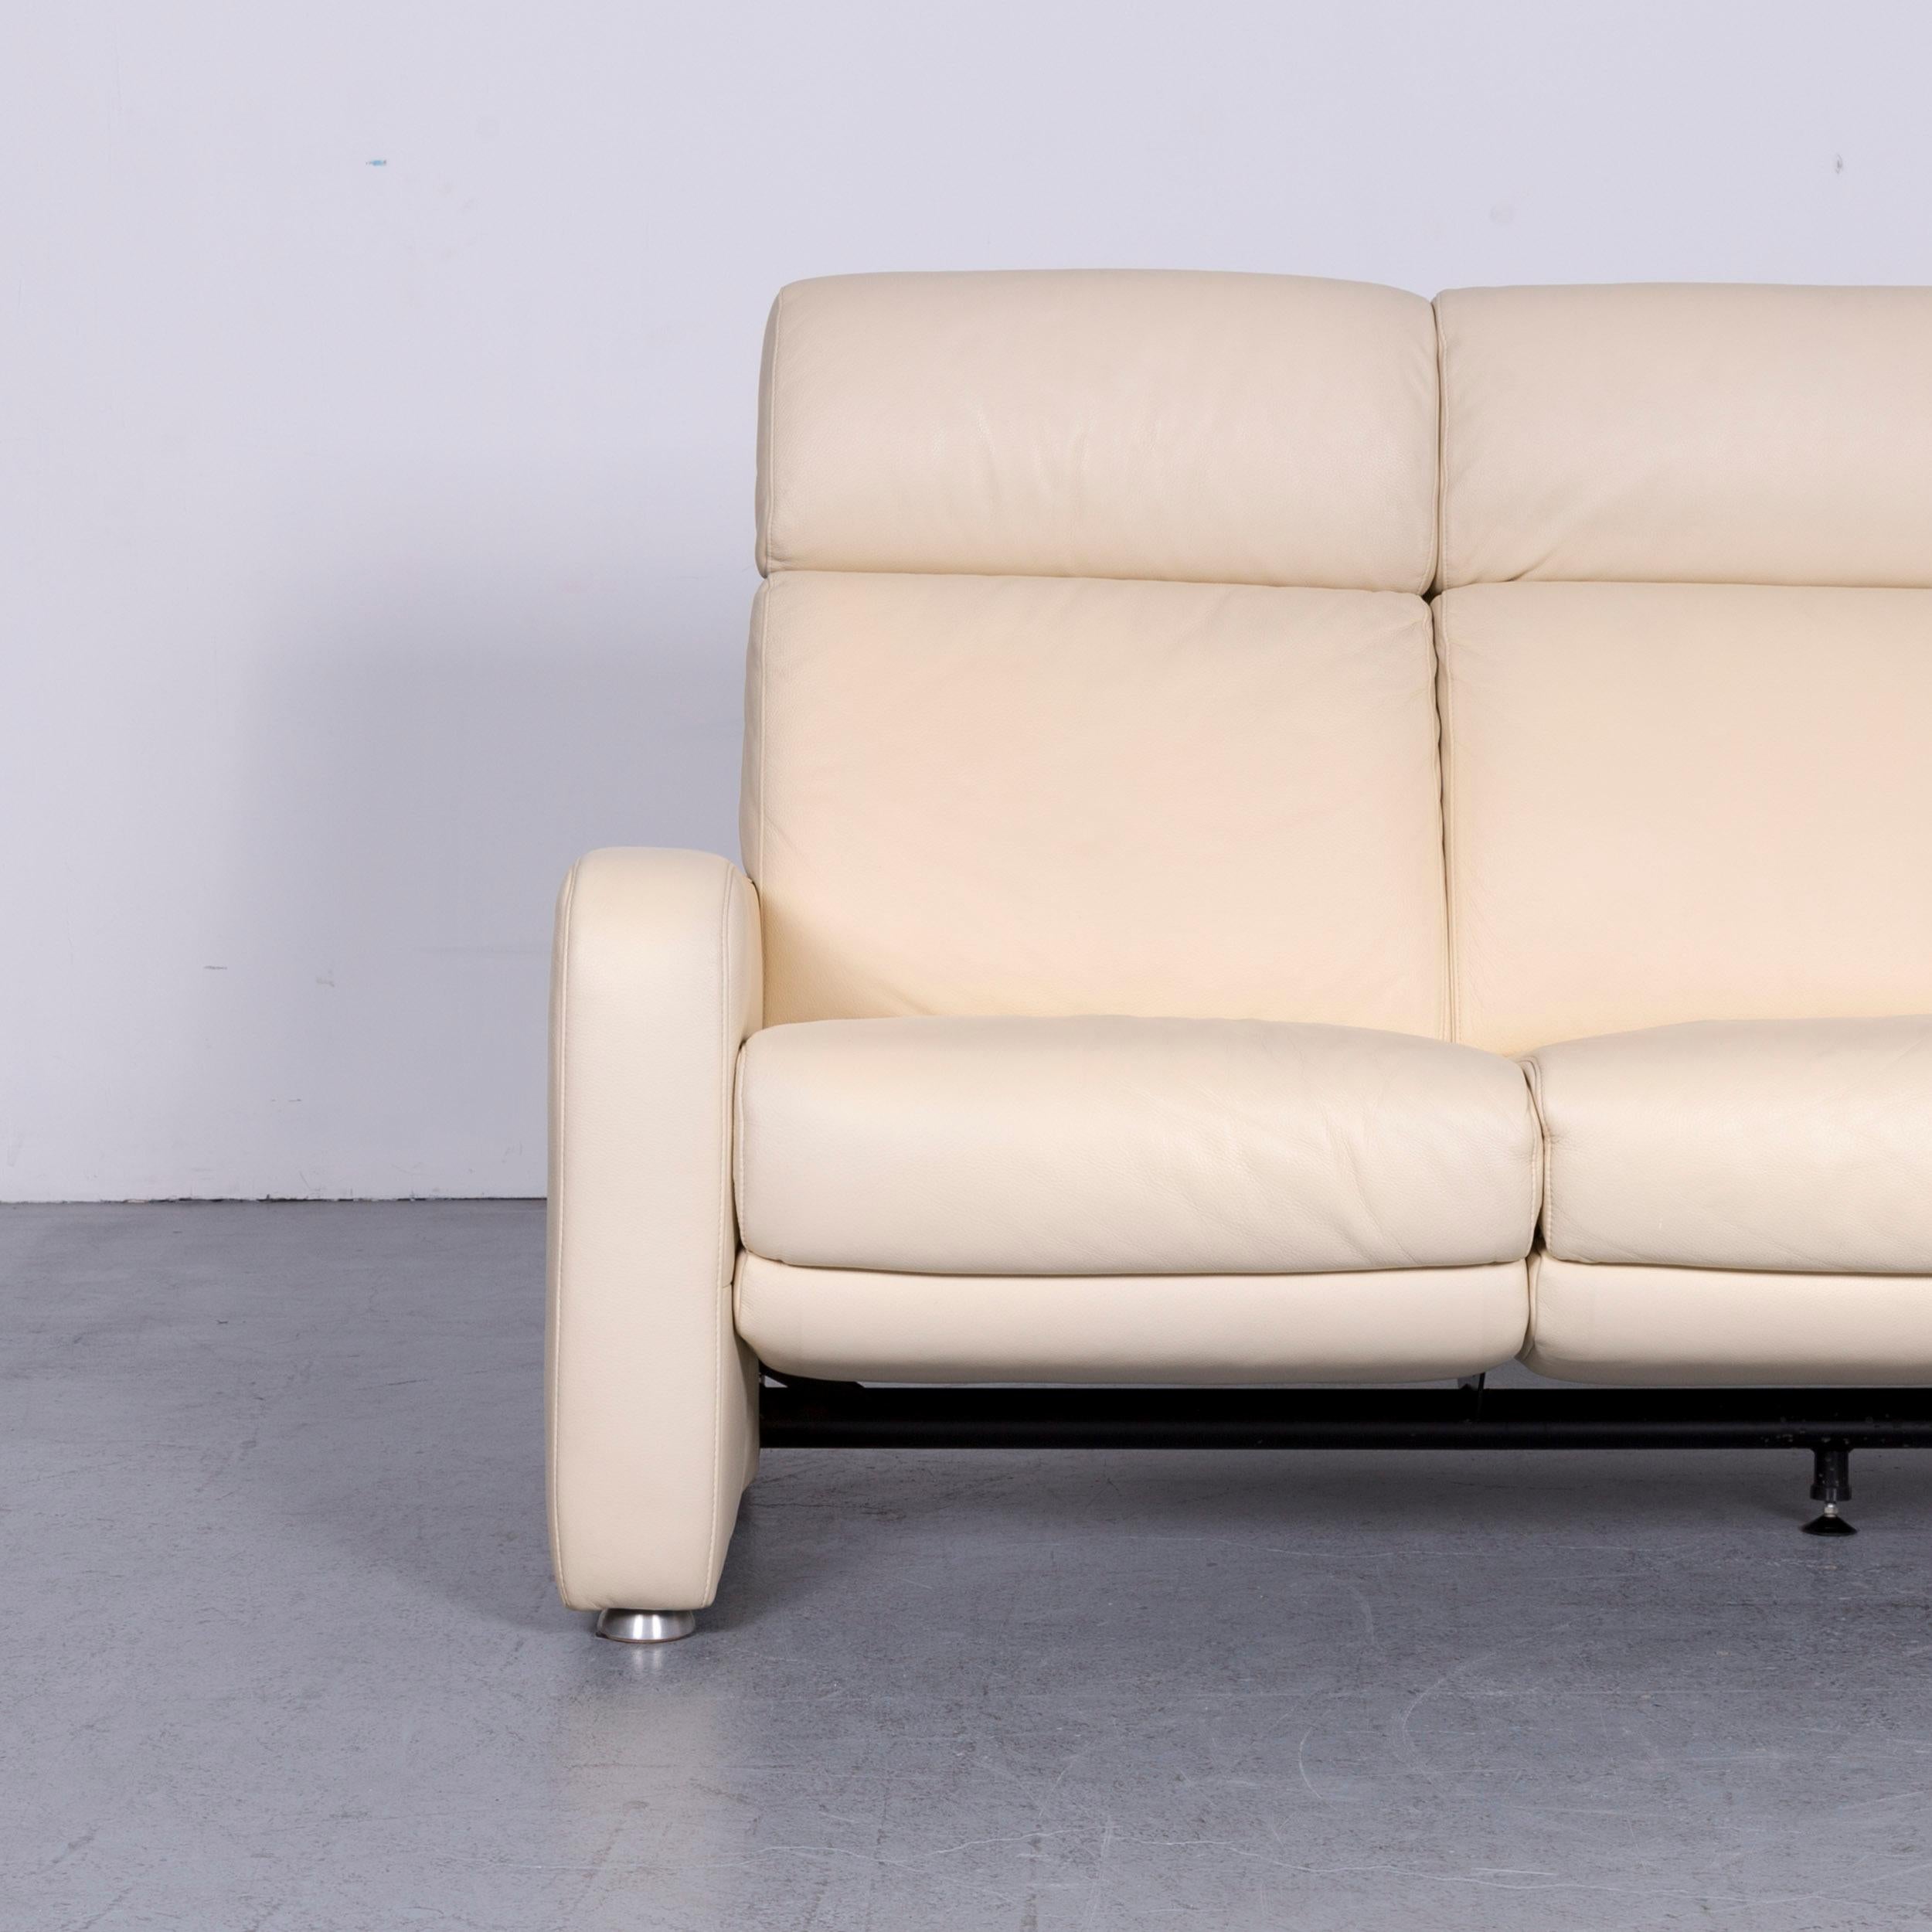 German Willi Schillig Designer Leather Sofa Beige Three-Seat Couch with Function